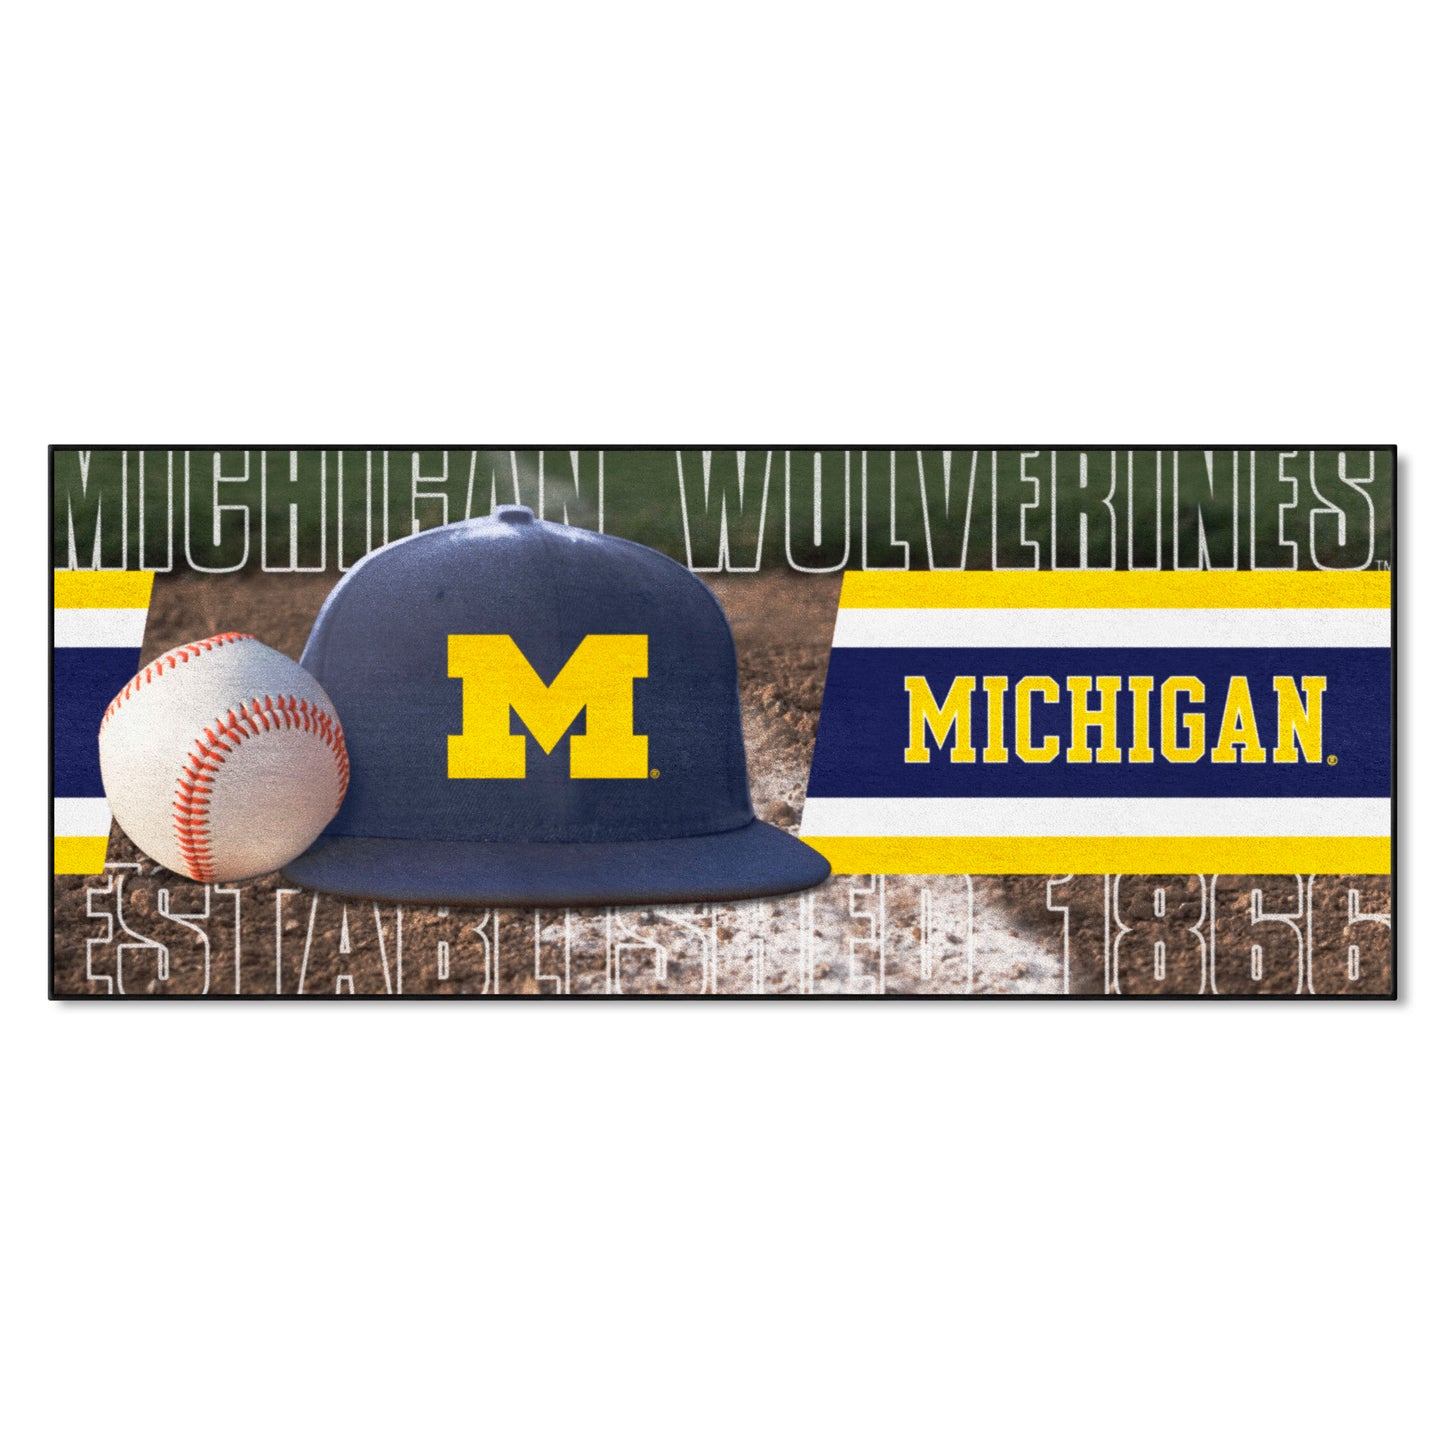 Michigan Wolverines Baseball Runner Rug - 30in. x 72in.